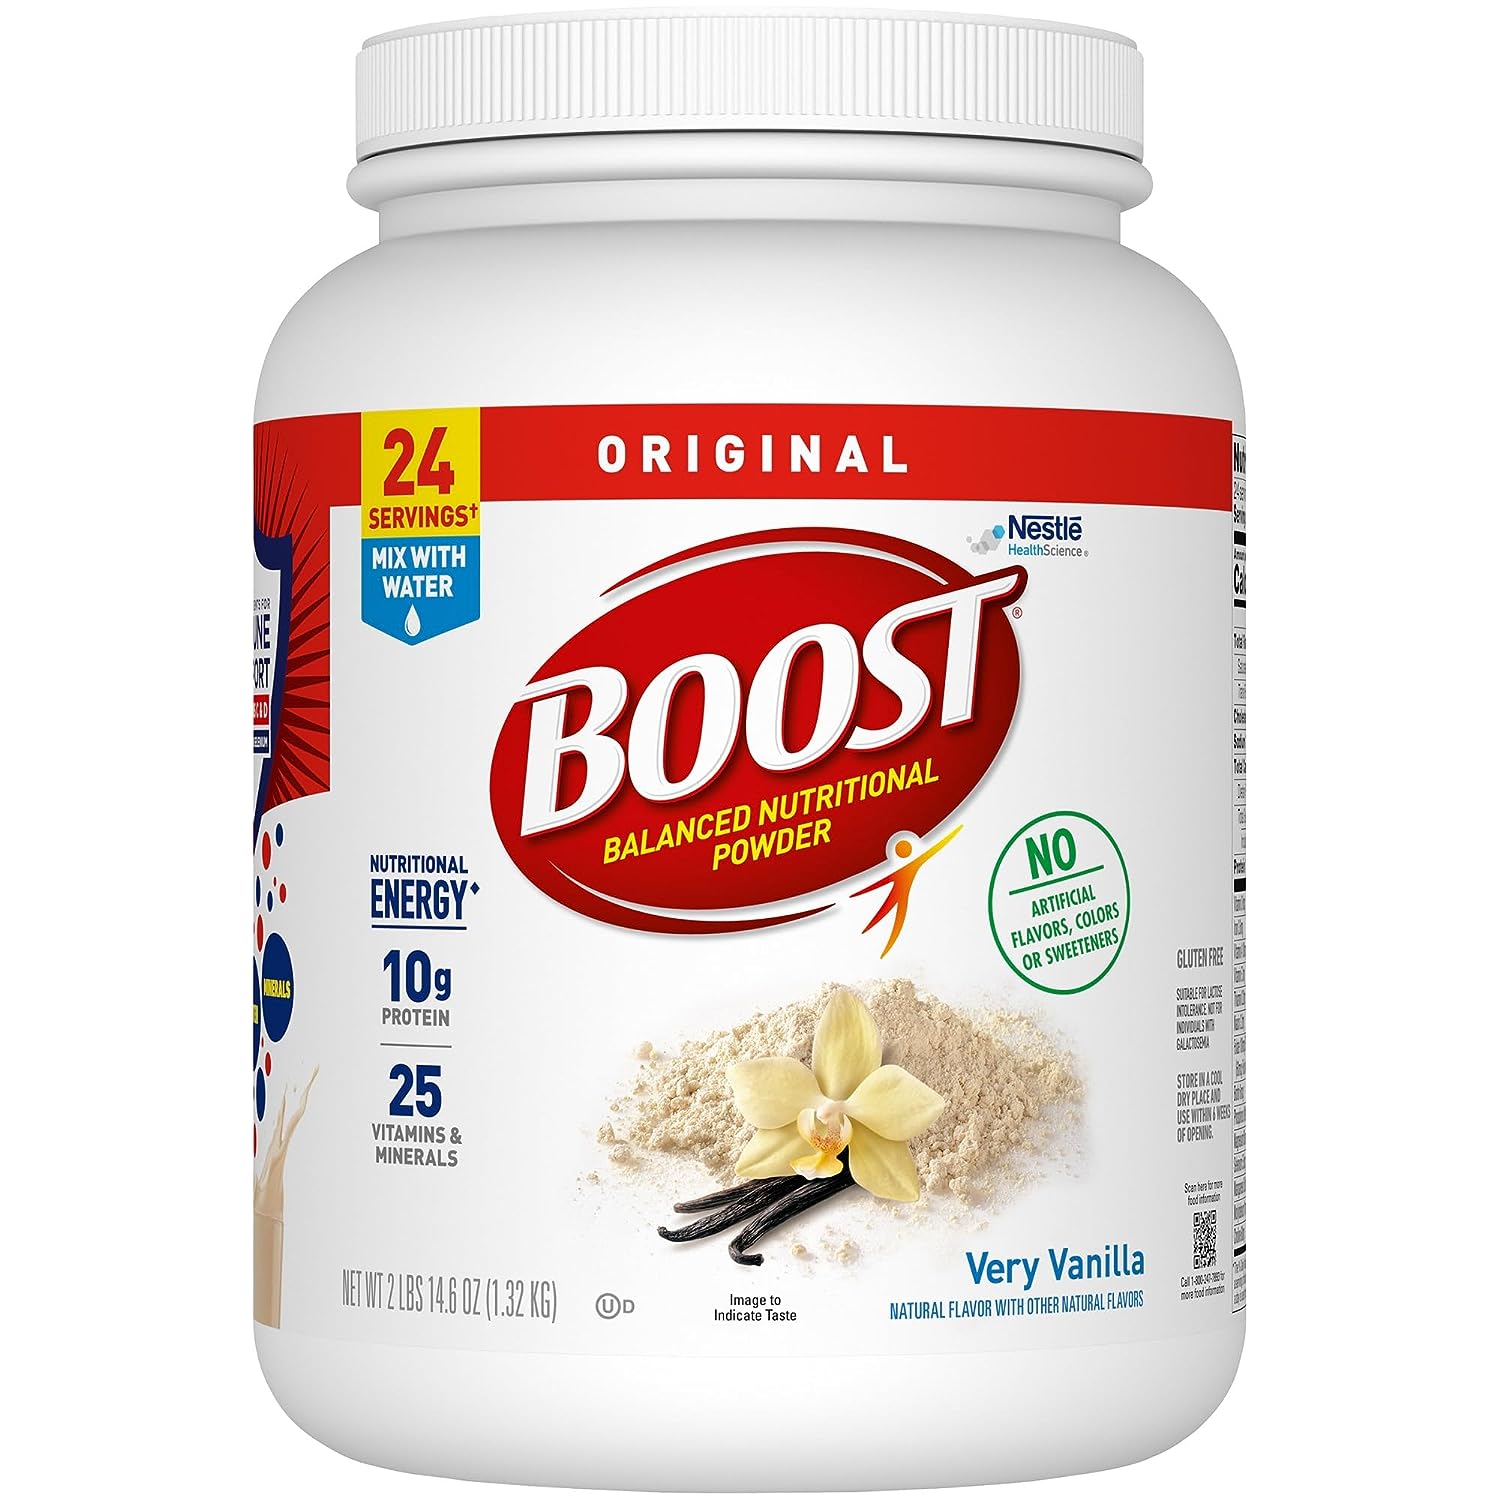 BOOST Original Balanced Nutritional Powder Drink Mix with 10g Protein